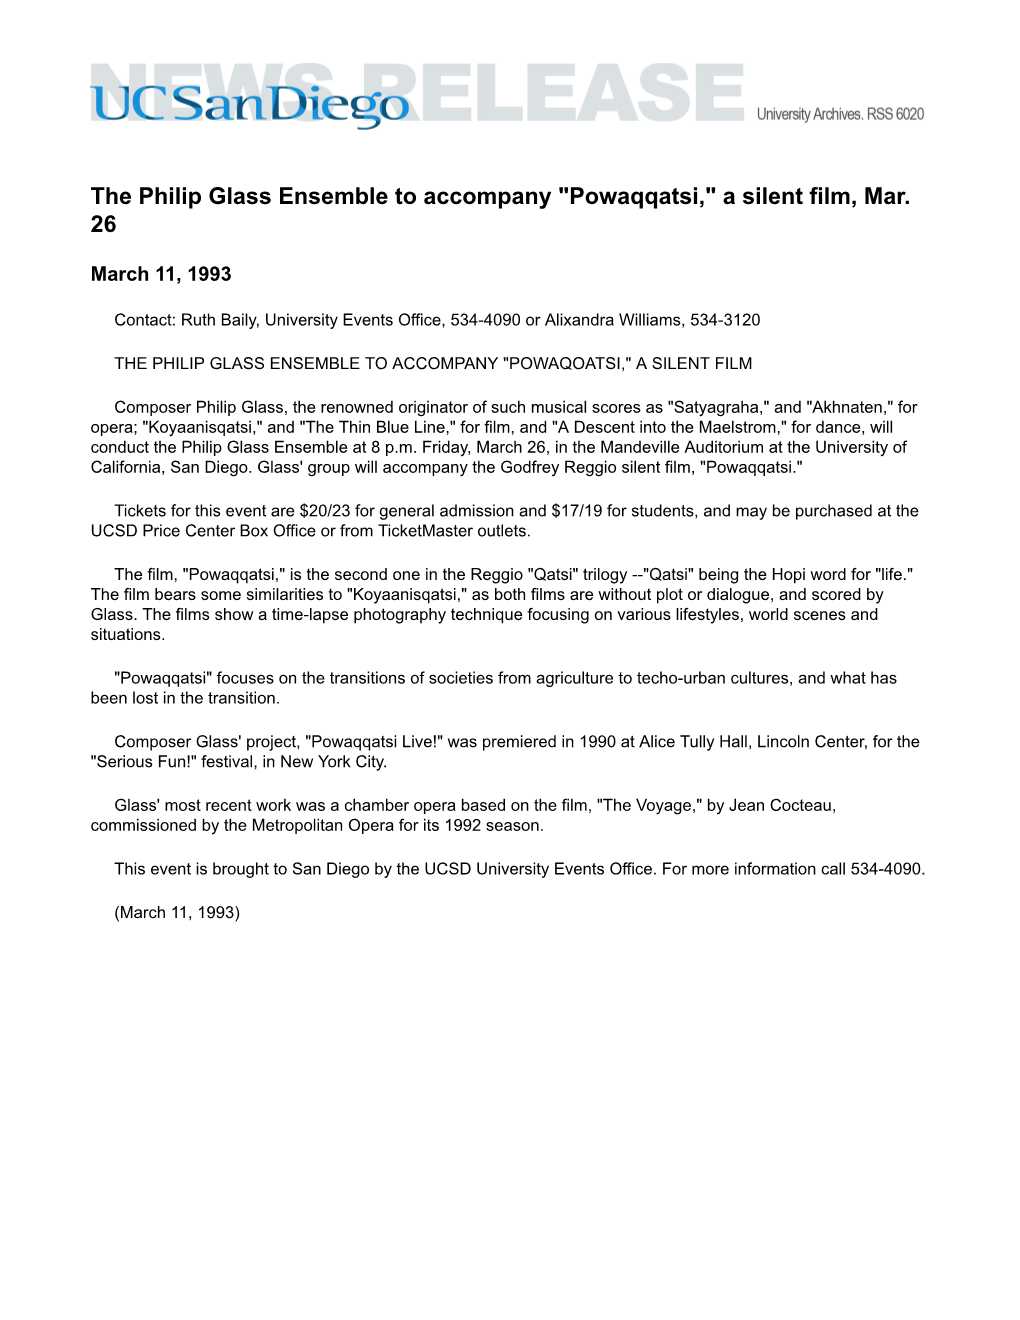 The Philip Glass Ensemble to Accompany "Powaqqatsi," a Silent Film, Mar